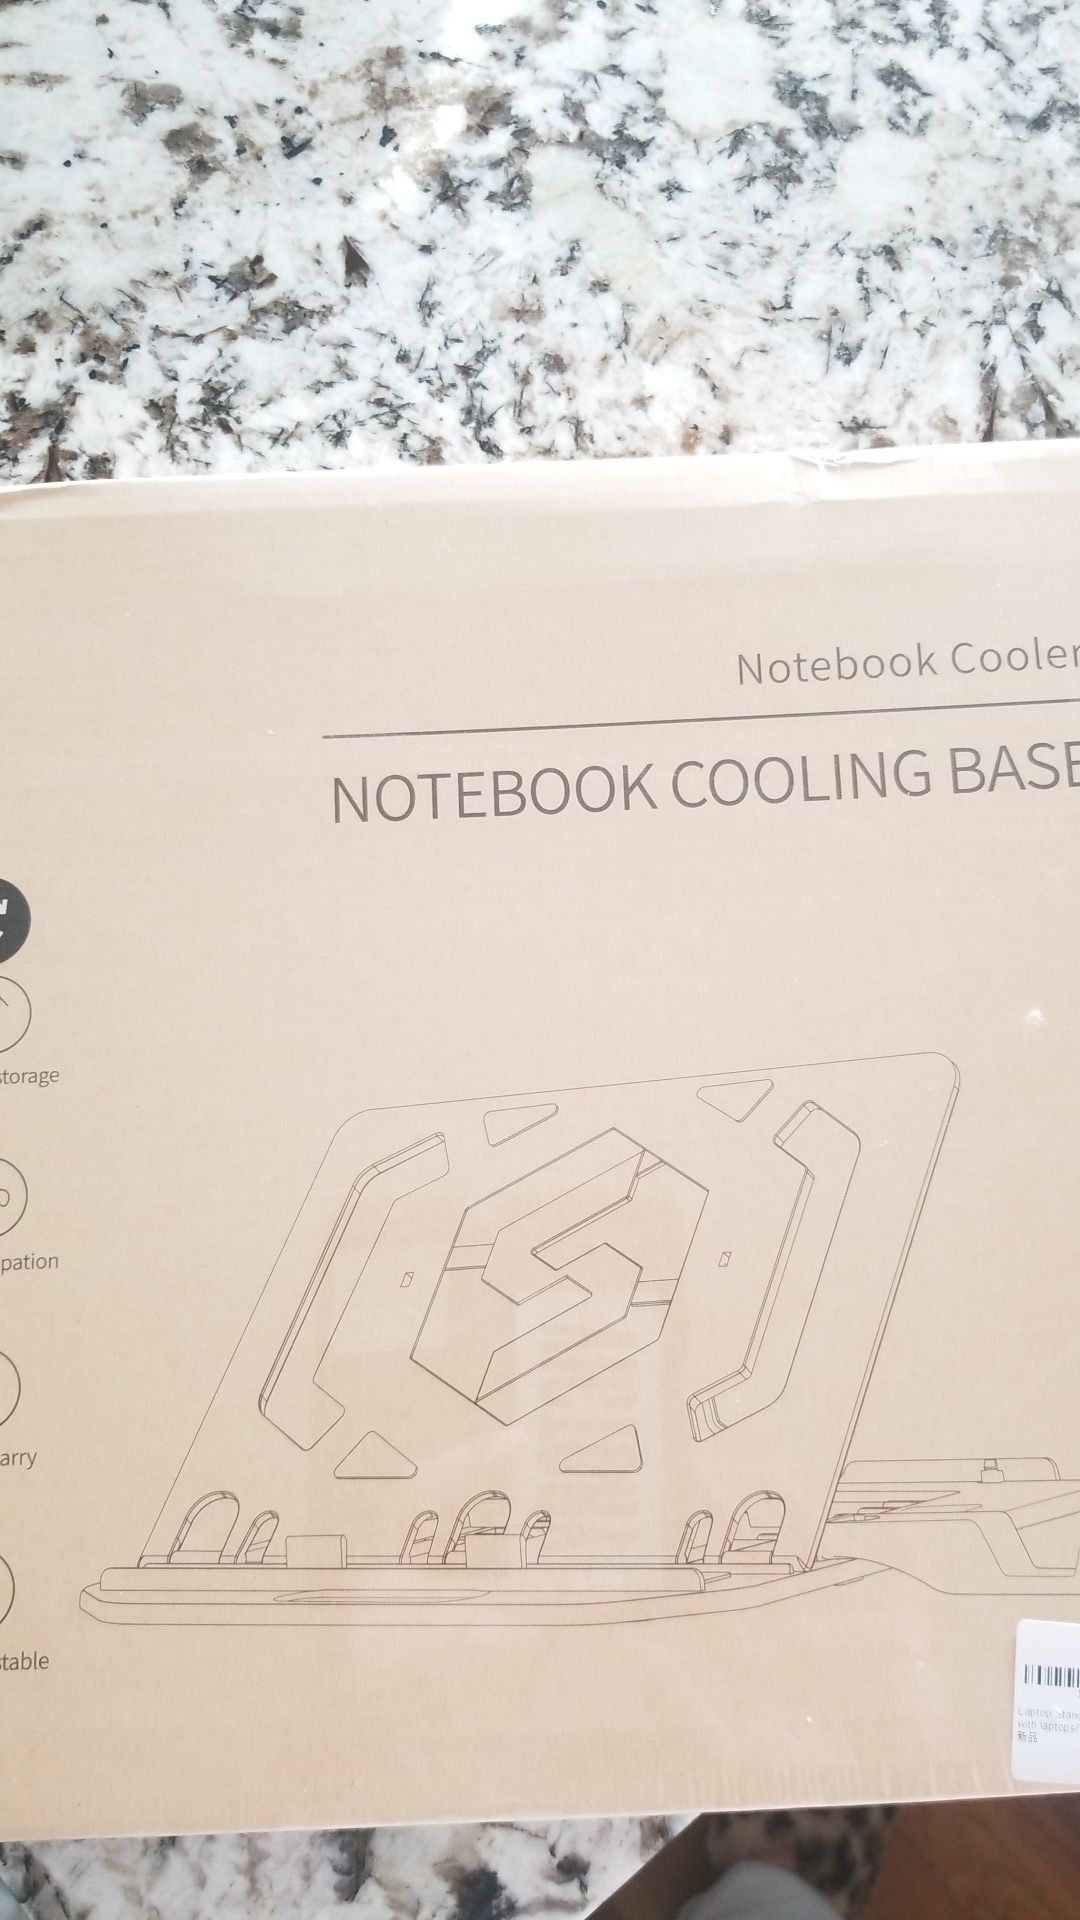 Notebook cooling base